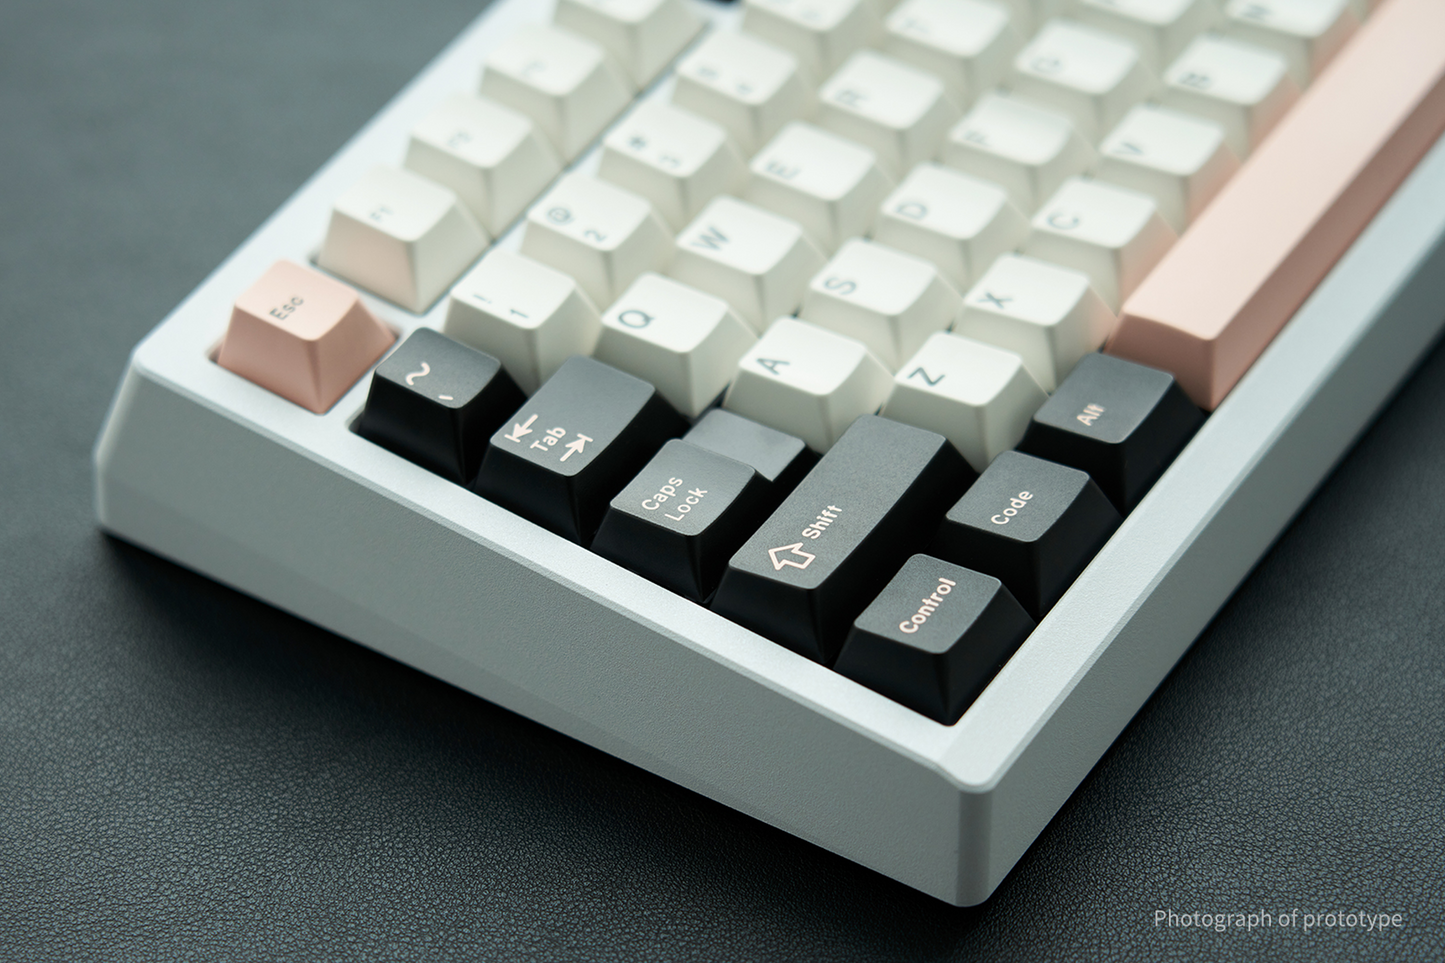 [Group-Buy] Meletrix Zoom75 Essential Edition (EE) - Barebones Keyboard Kit - White [Sea Shipping]